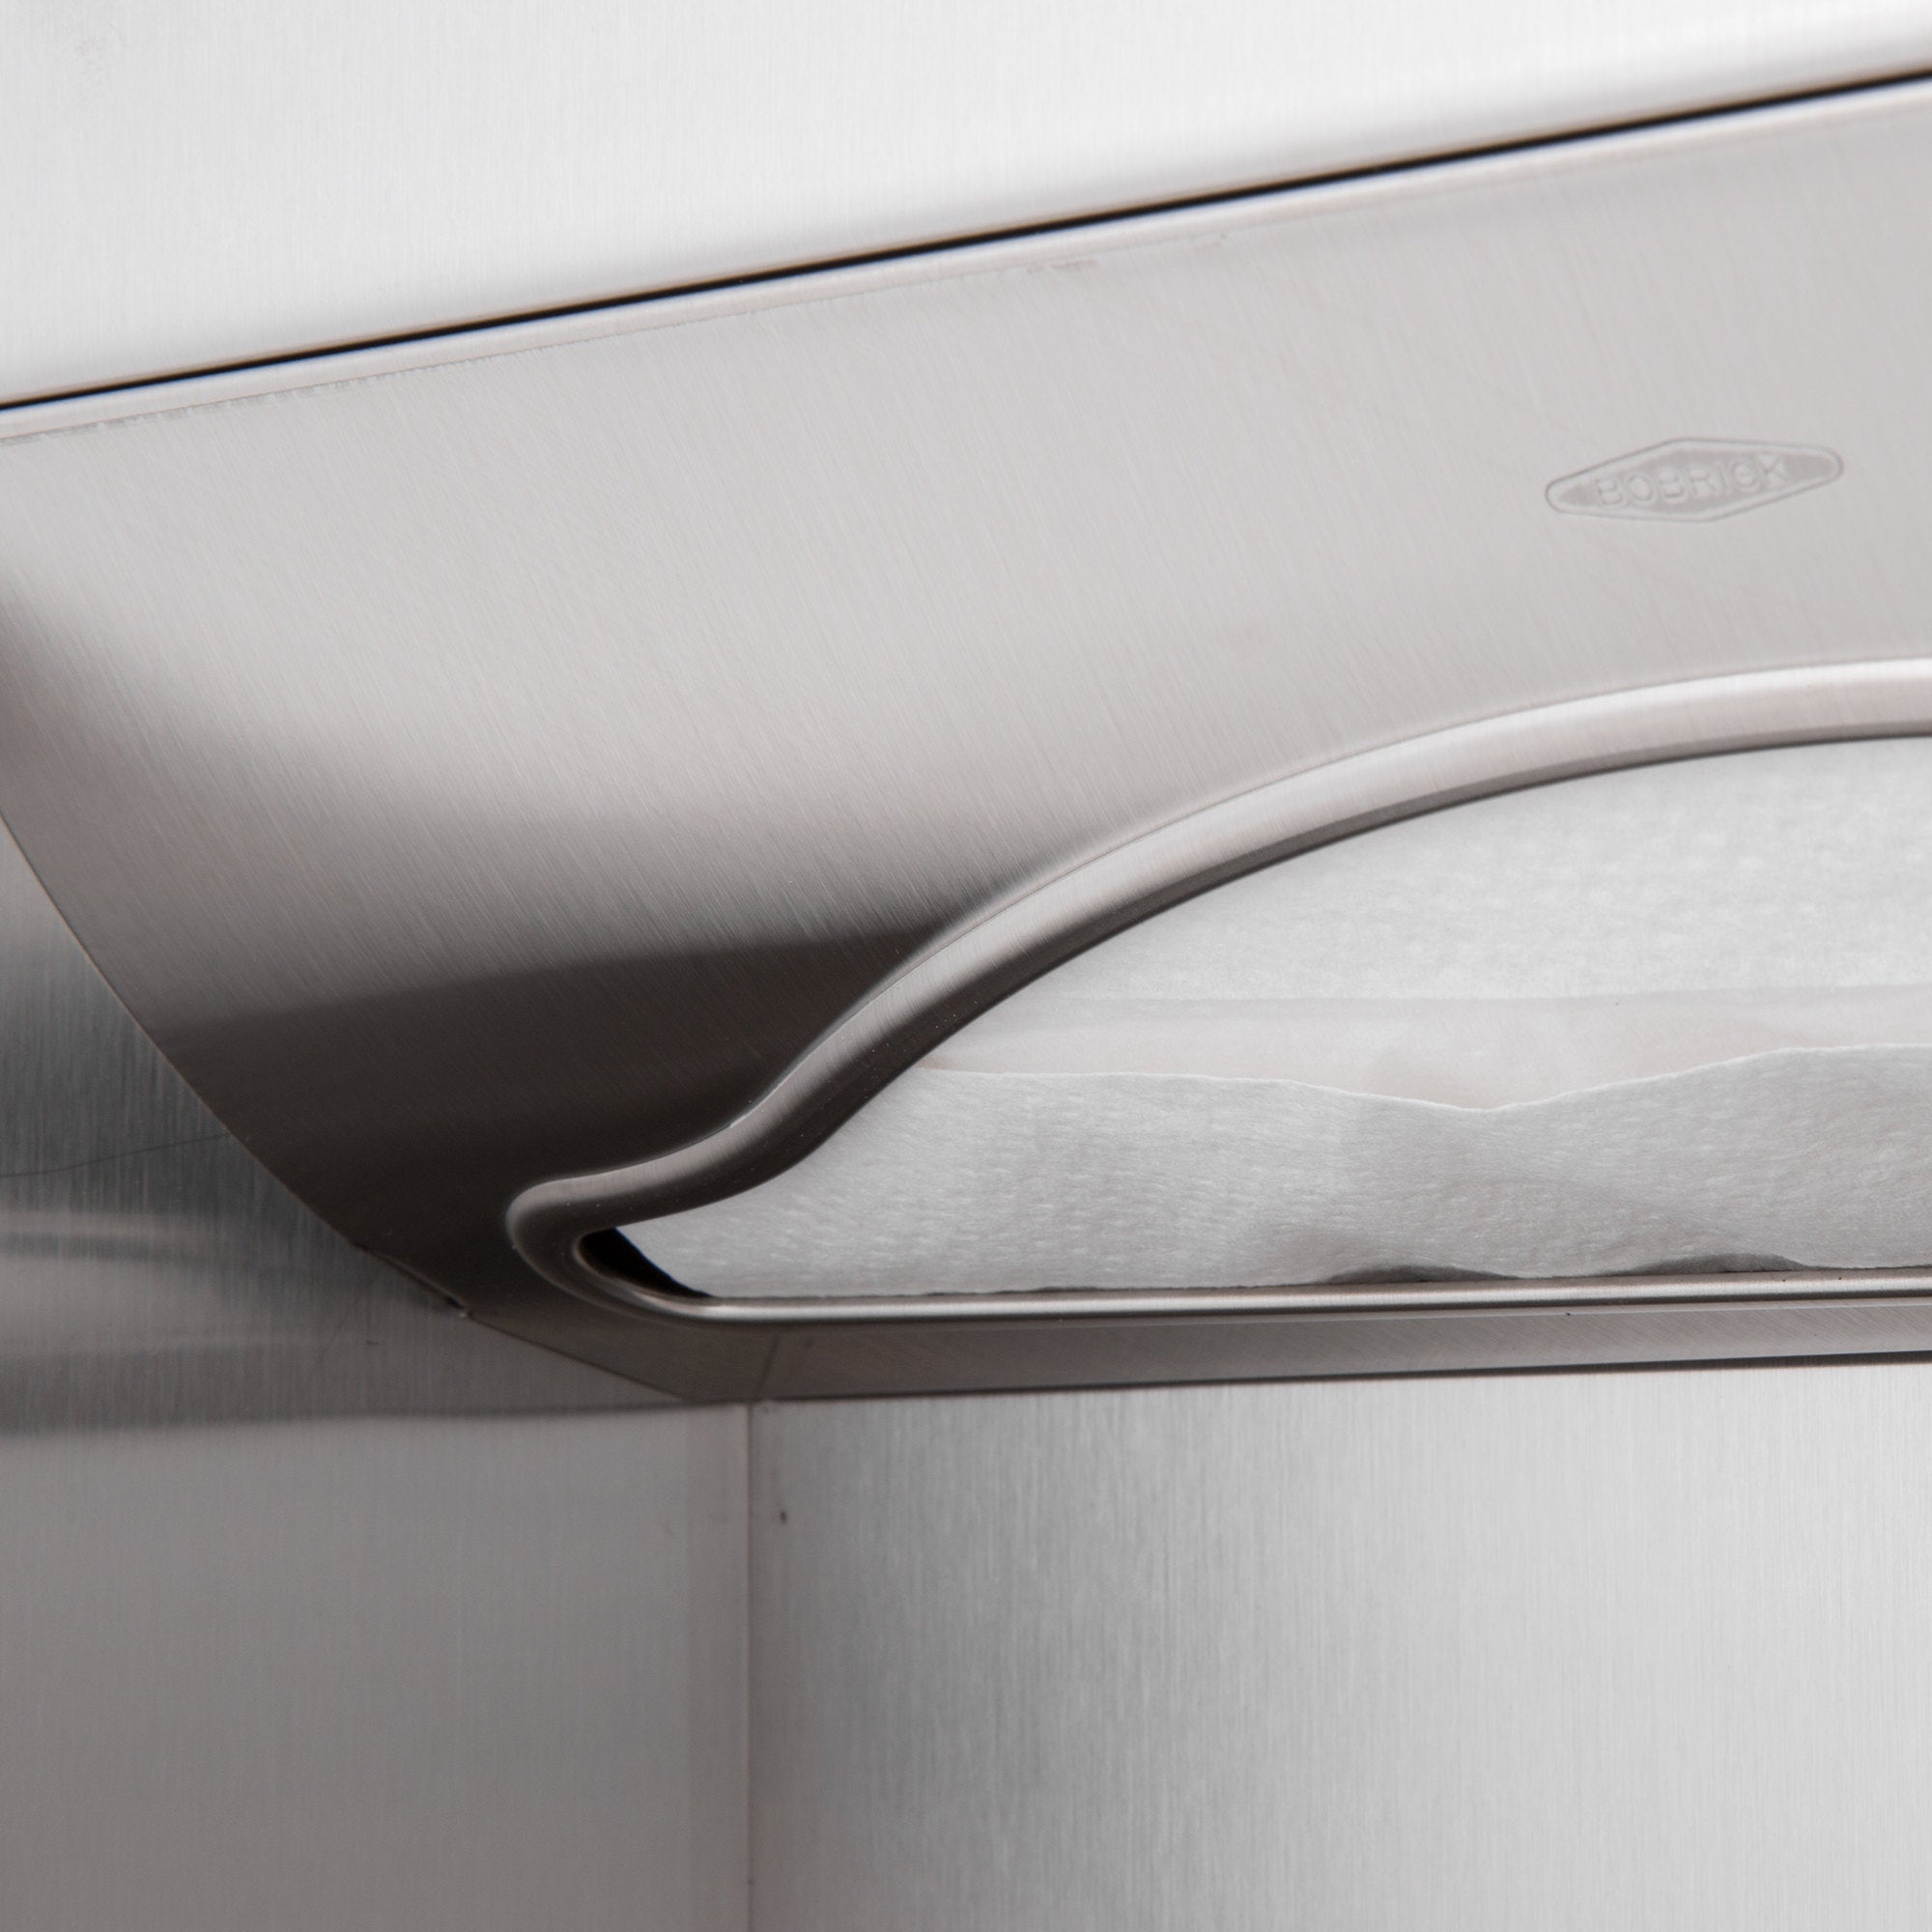 Bobrick B-369 Recessed Paper Towel Dispenser/Waste Receptacle